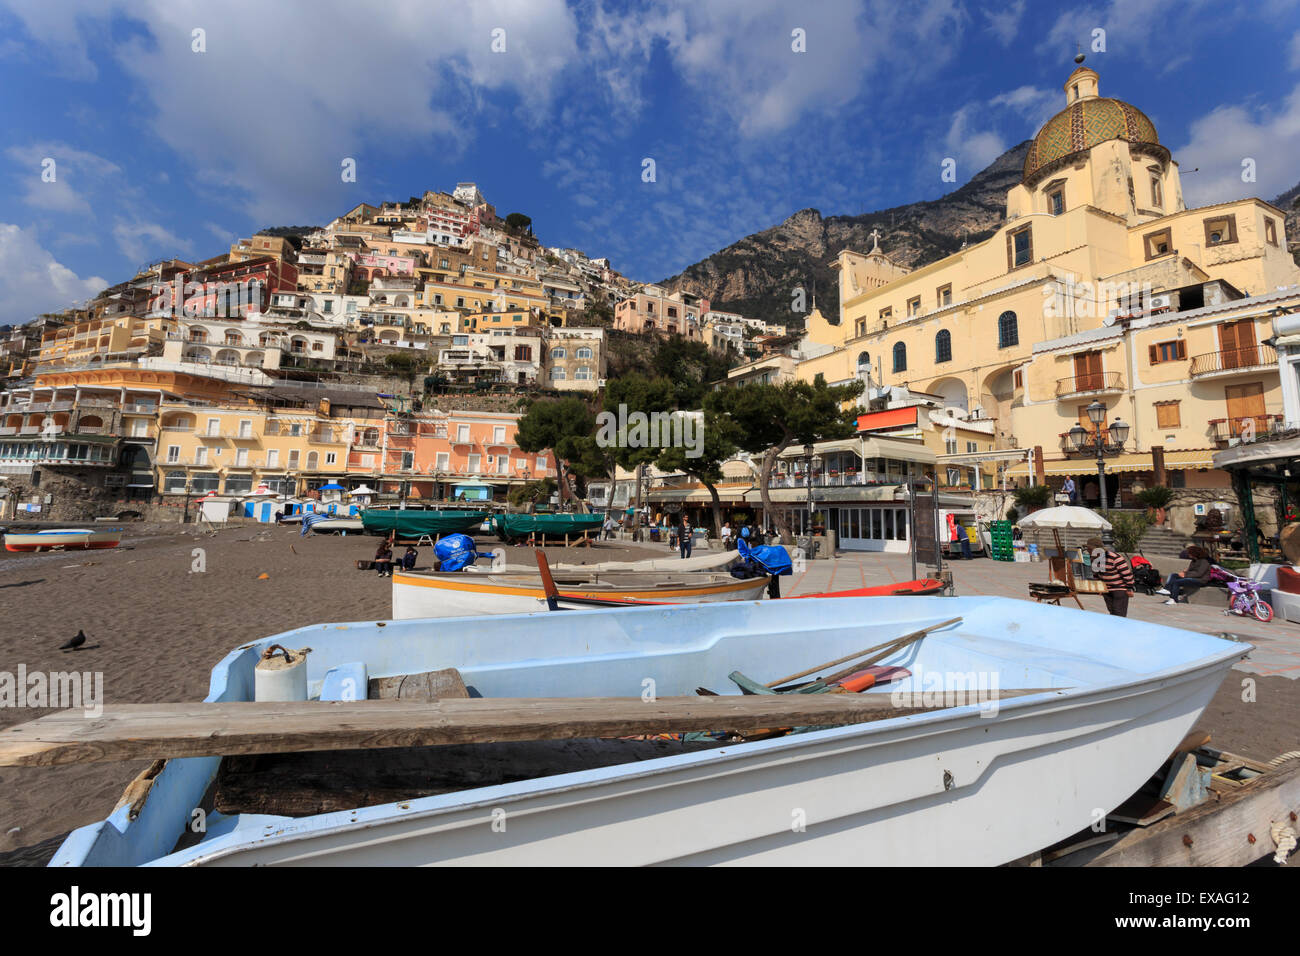 Small boats on beach, Positano, Costiera Amalfitana (Amalfi Coast), UNESCO World Heritage Site, Campania, Italy, Europe Stock Photo